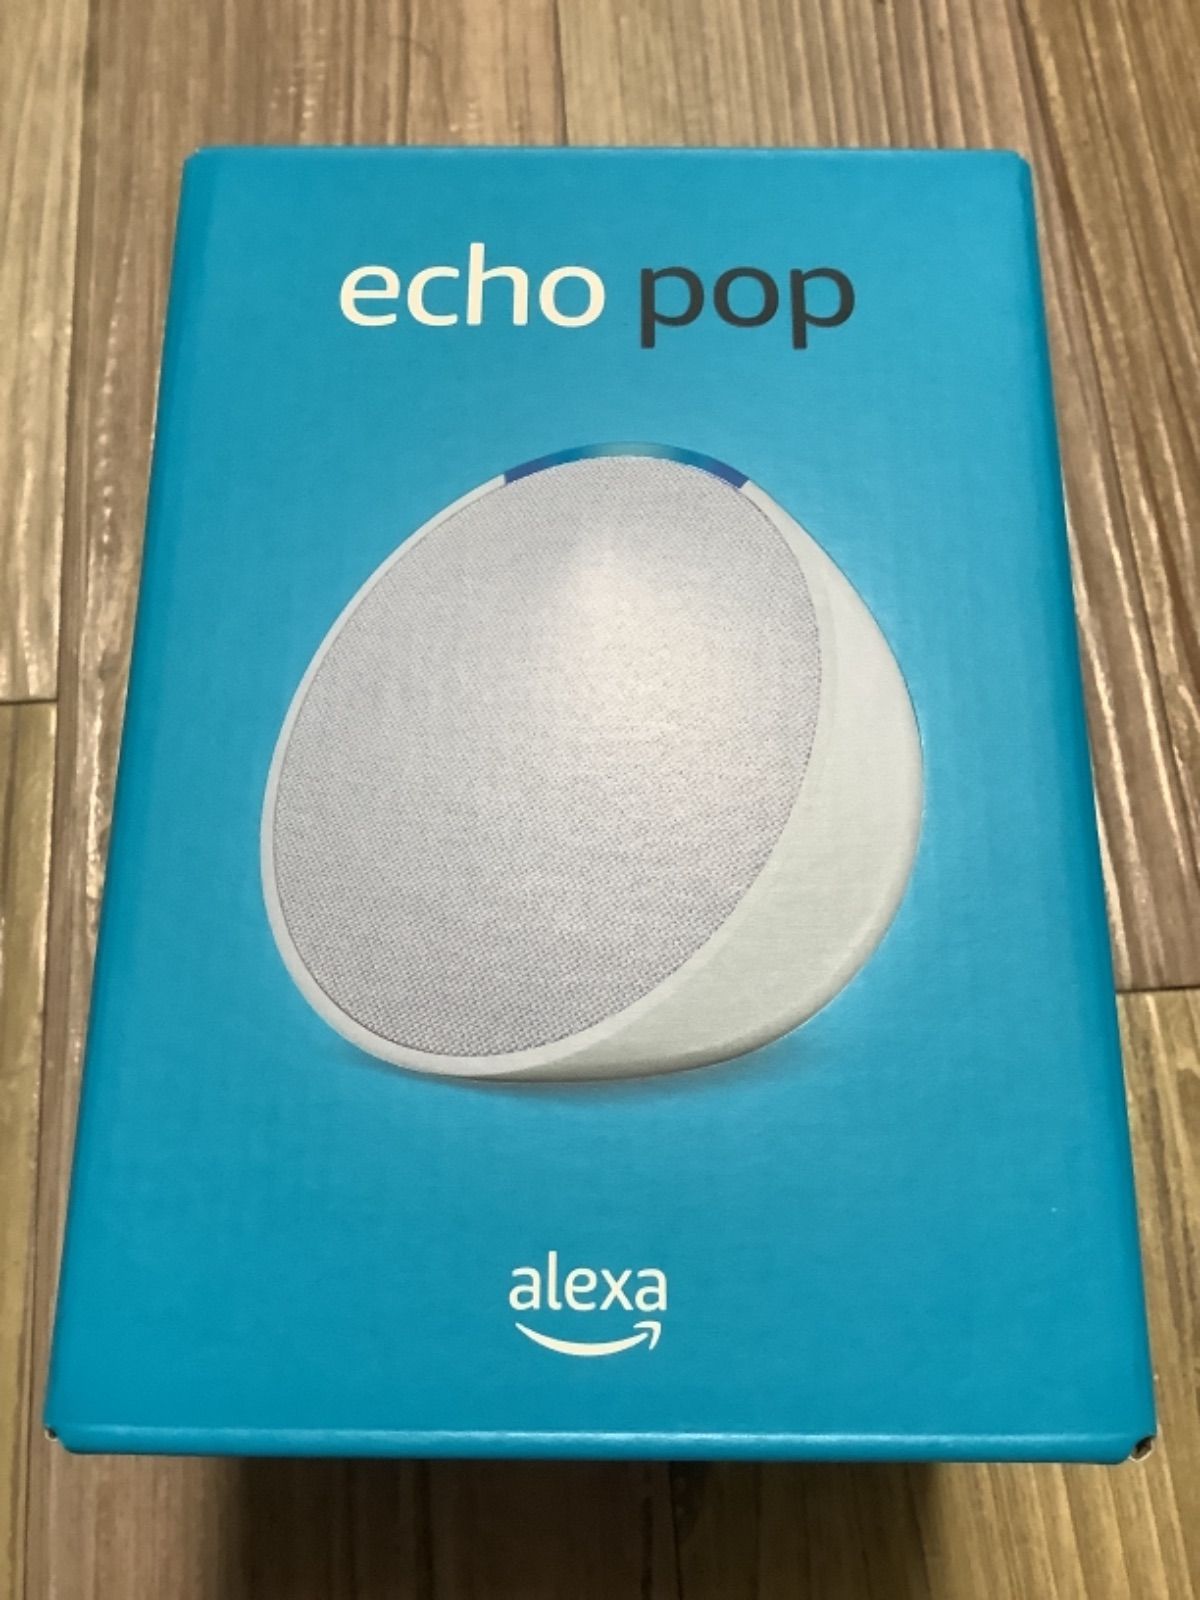 Echo Pop (エコーポップ) - コンパクトスマートスピーカー with Alexa ...